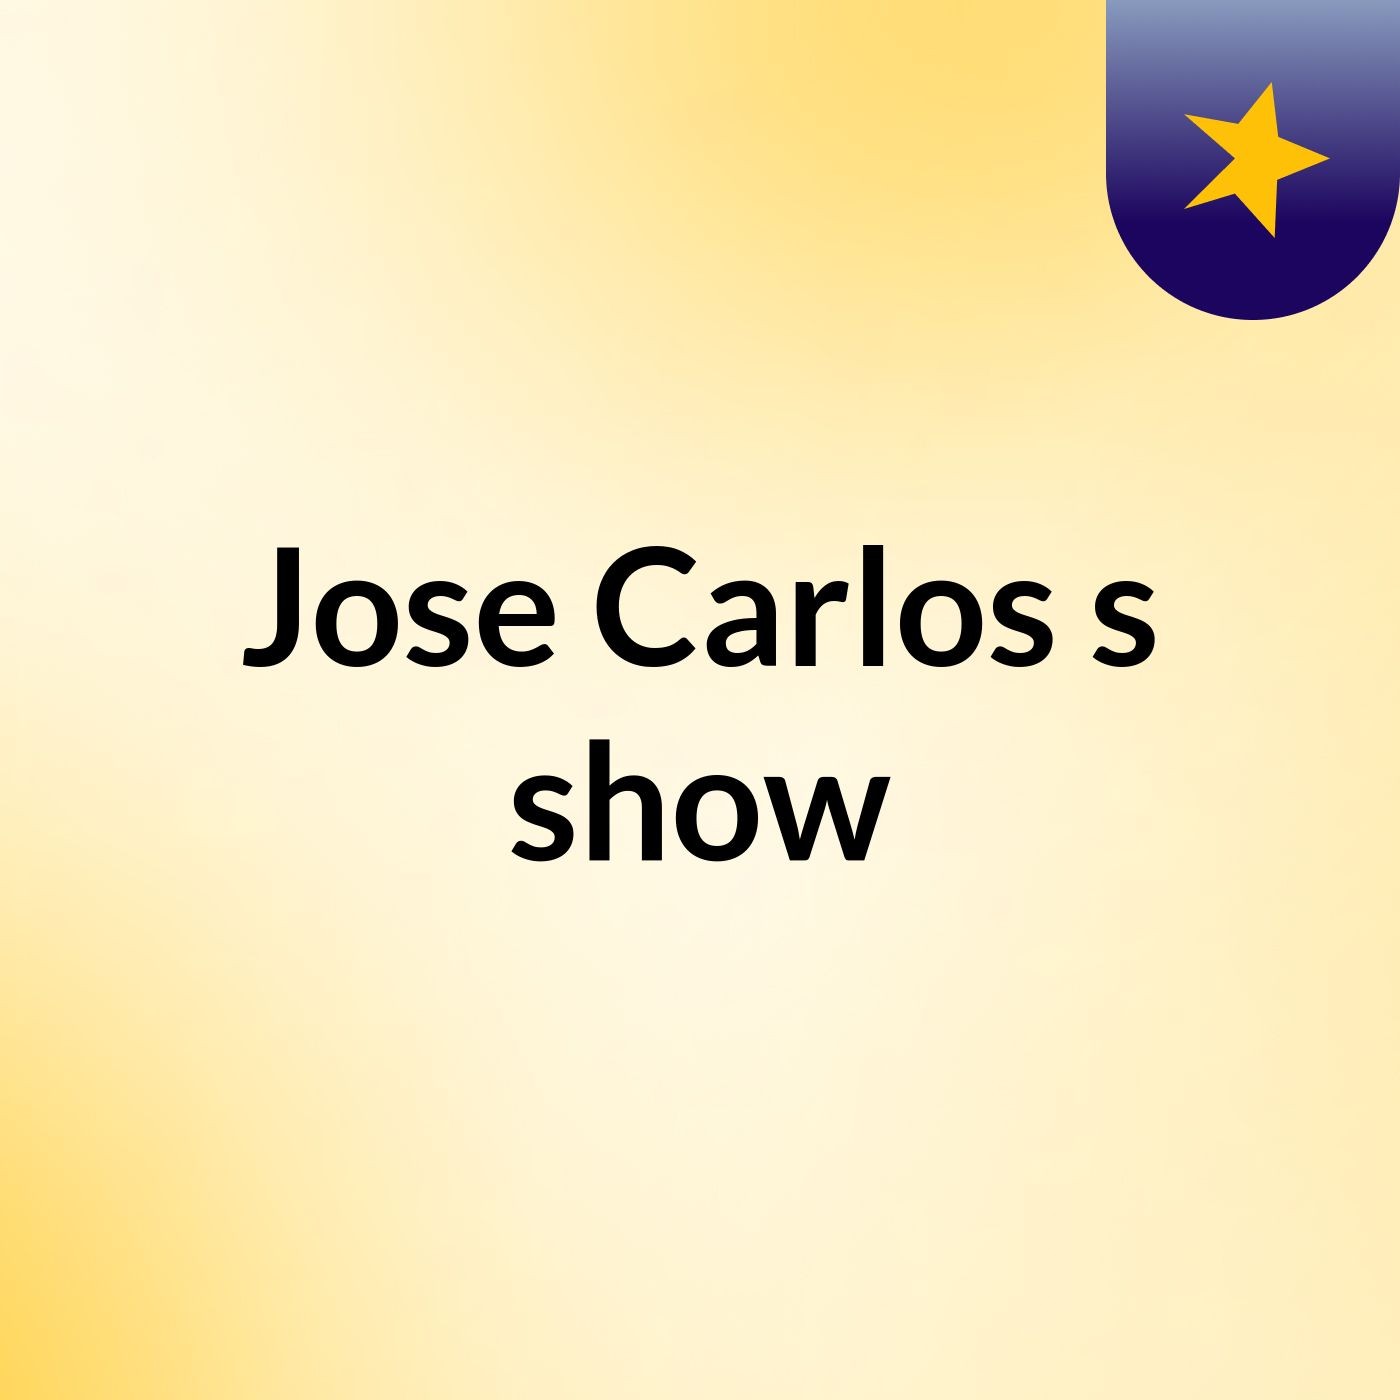 Jose Carlos's show